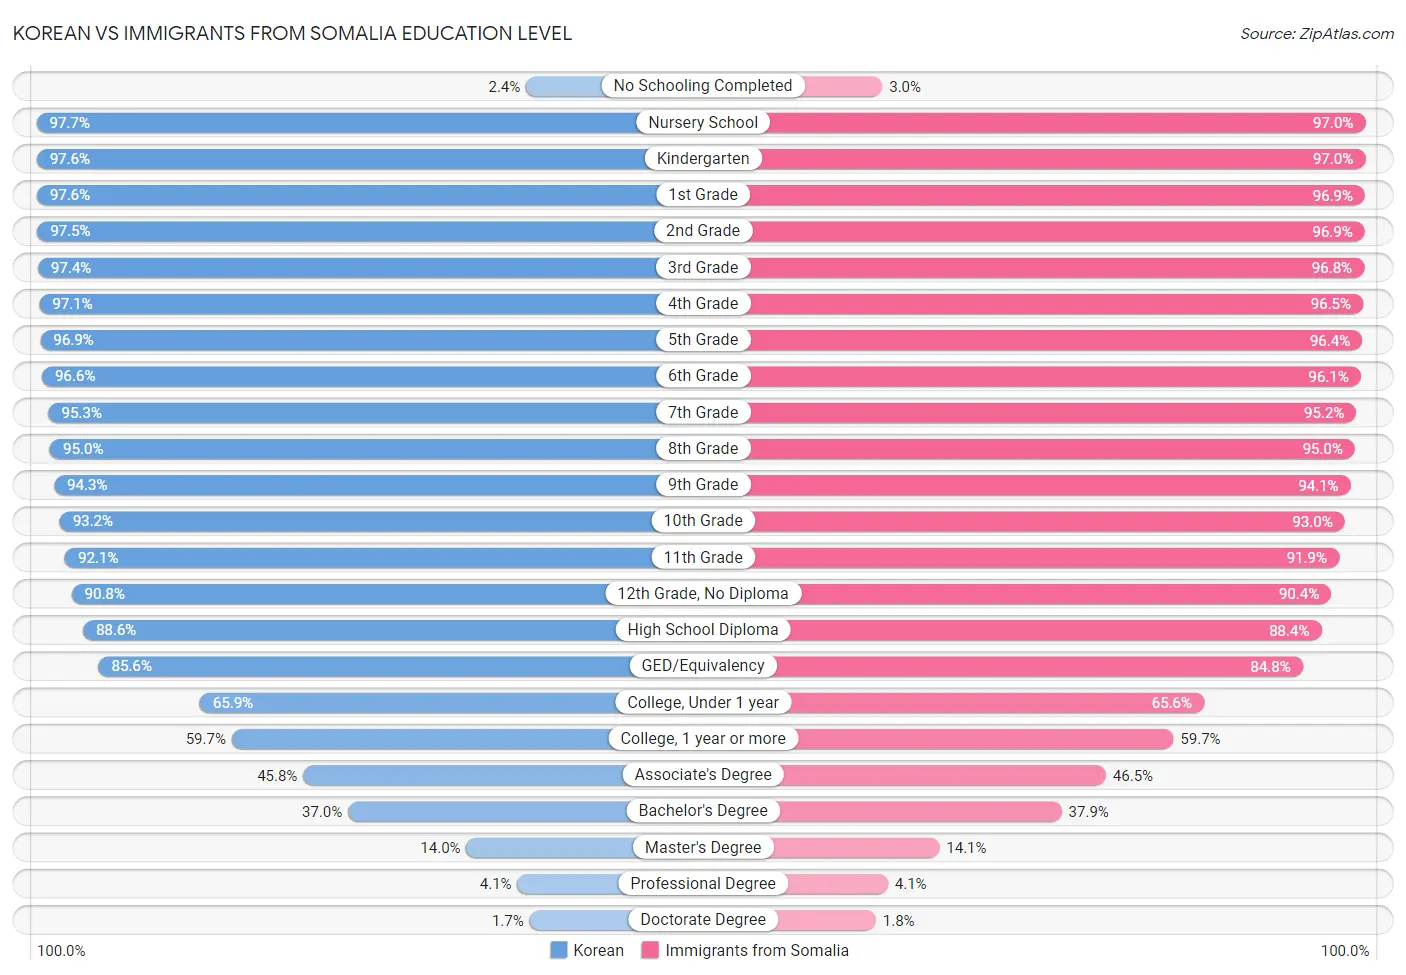 Korean vs Immigrants from Somalia Education Level